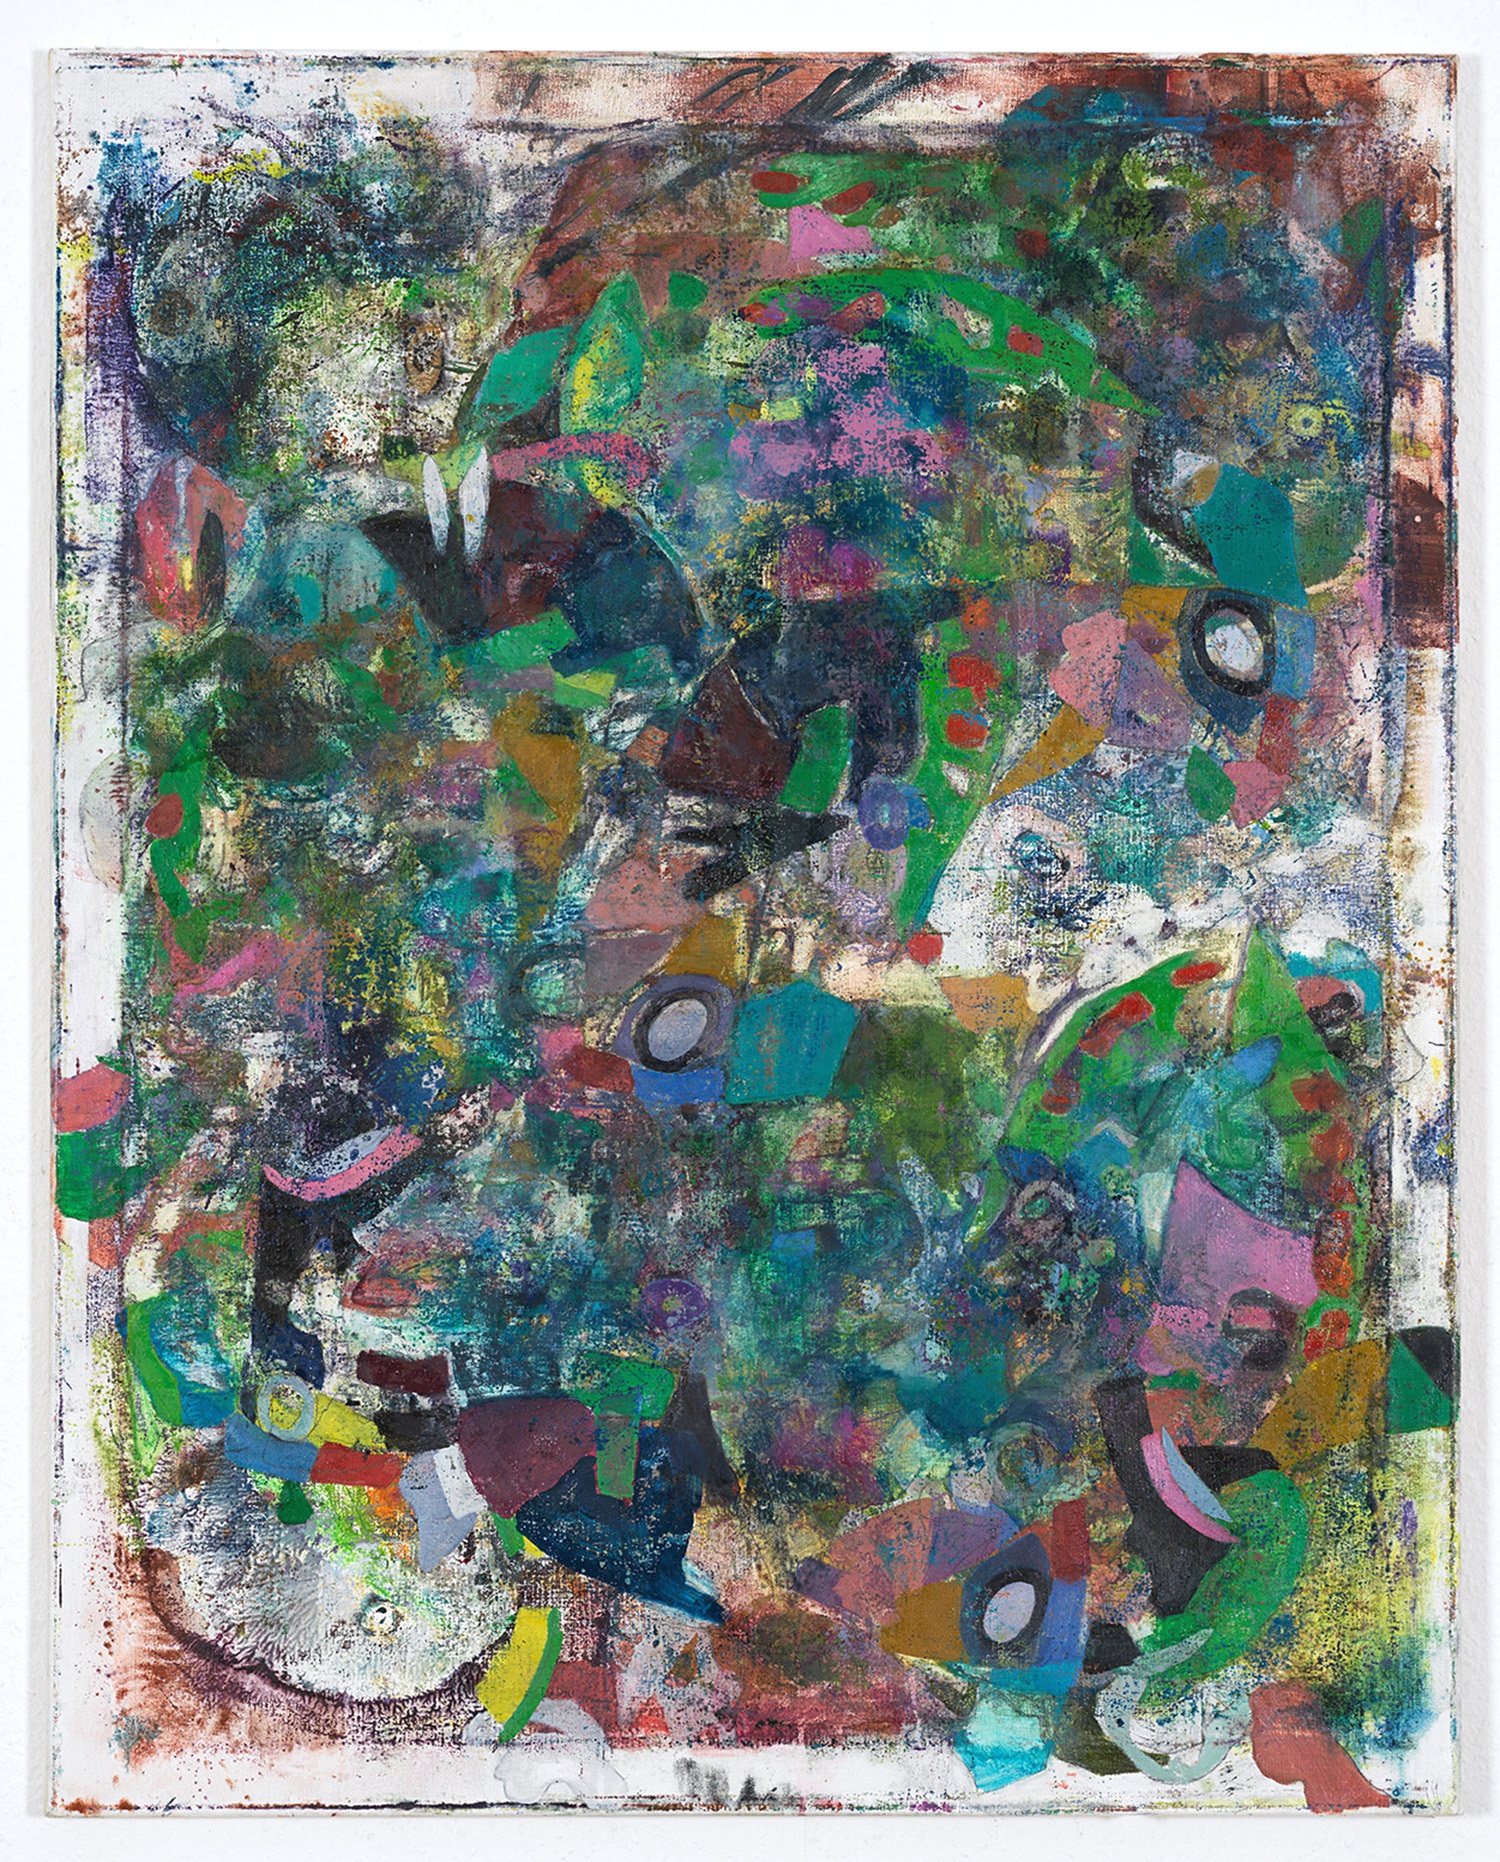  pierres (haptic gaze), 2019  100 x 80 cm. oil on canvas 